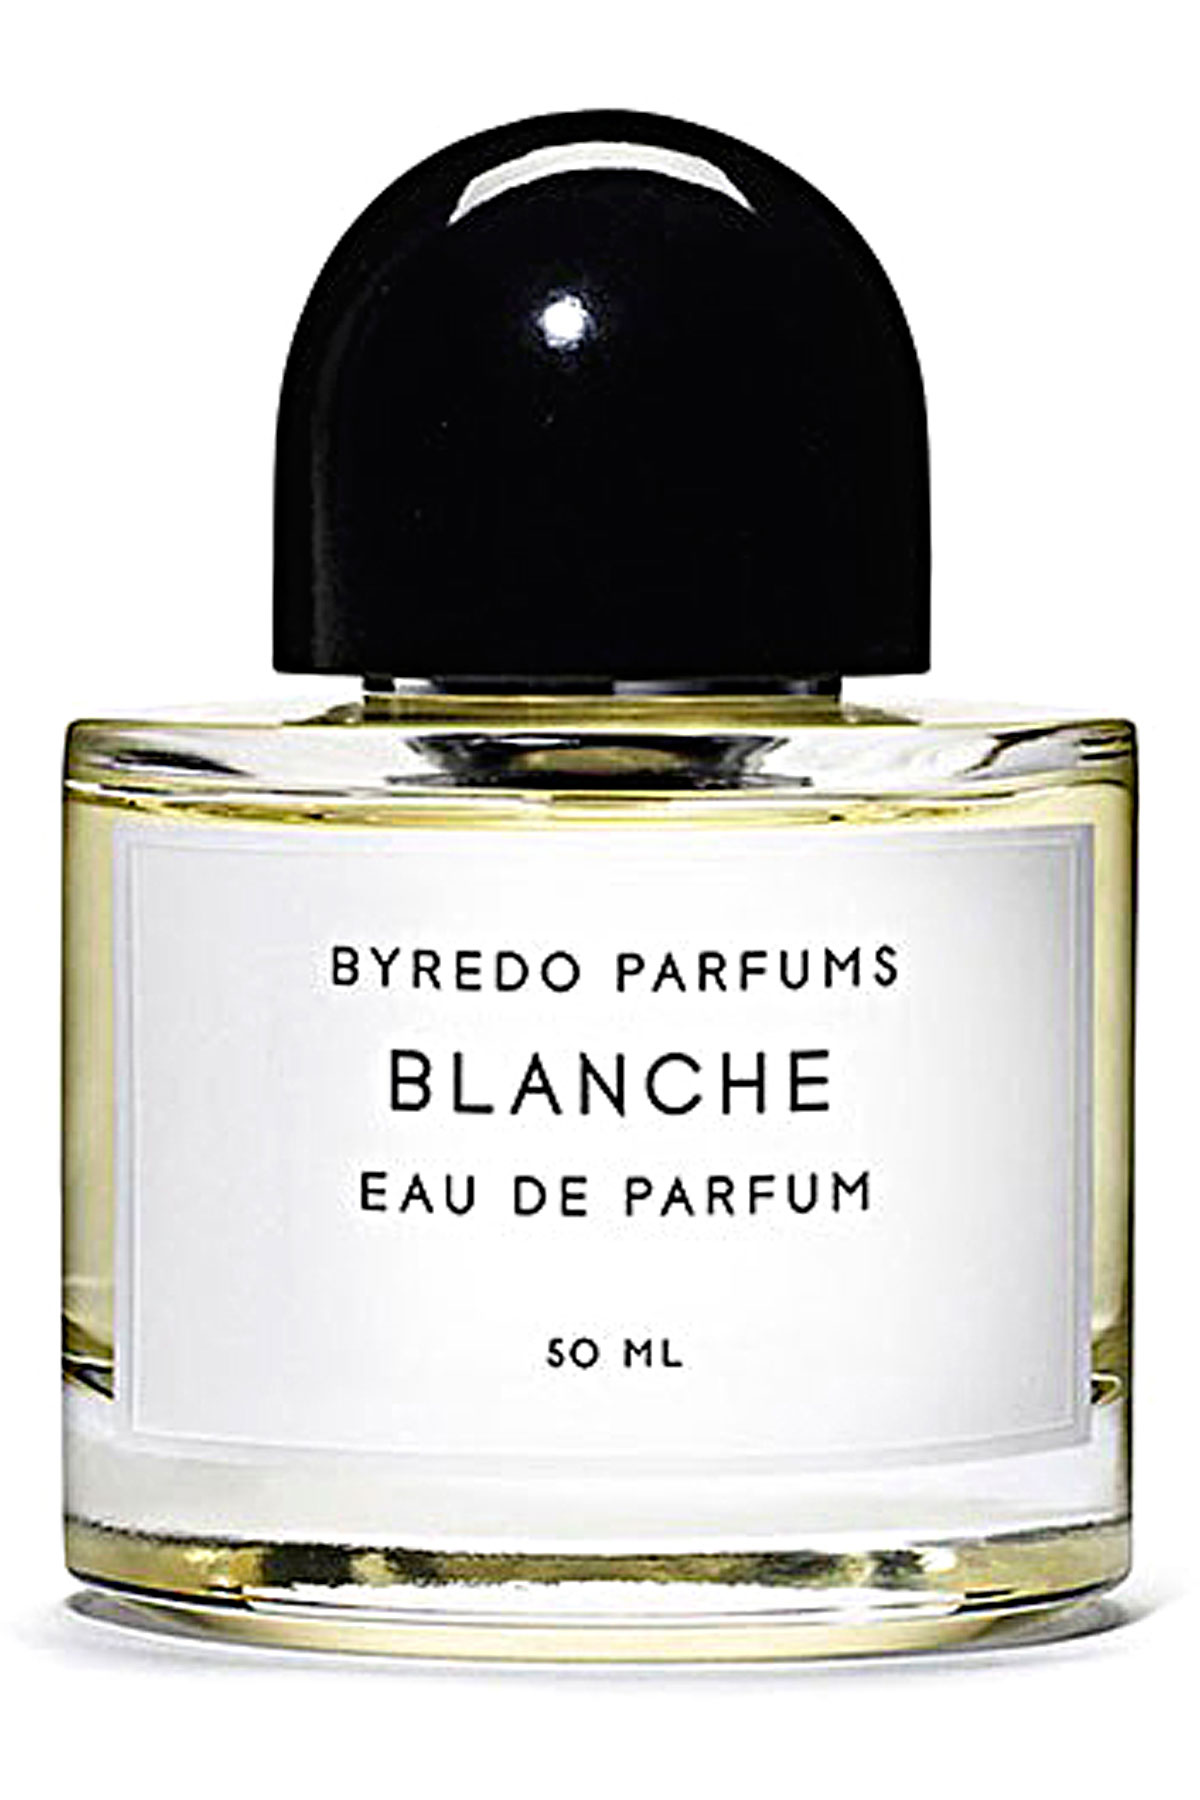 BLANCHE - EAU DE PARFUM - 50 ML, Womens Fragrances Byredo, Style code ...